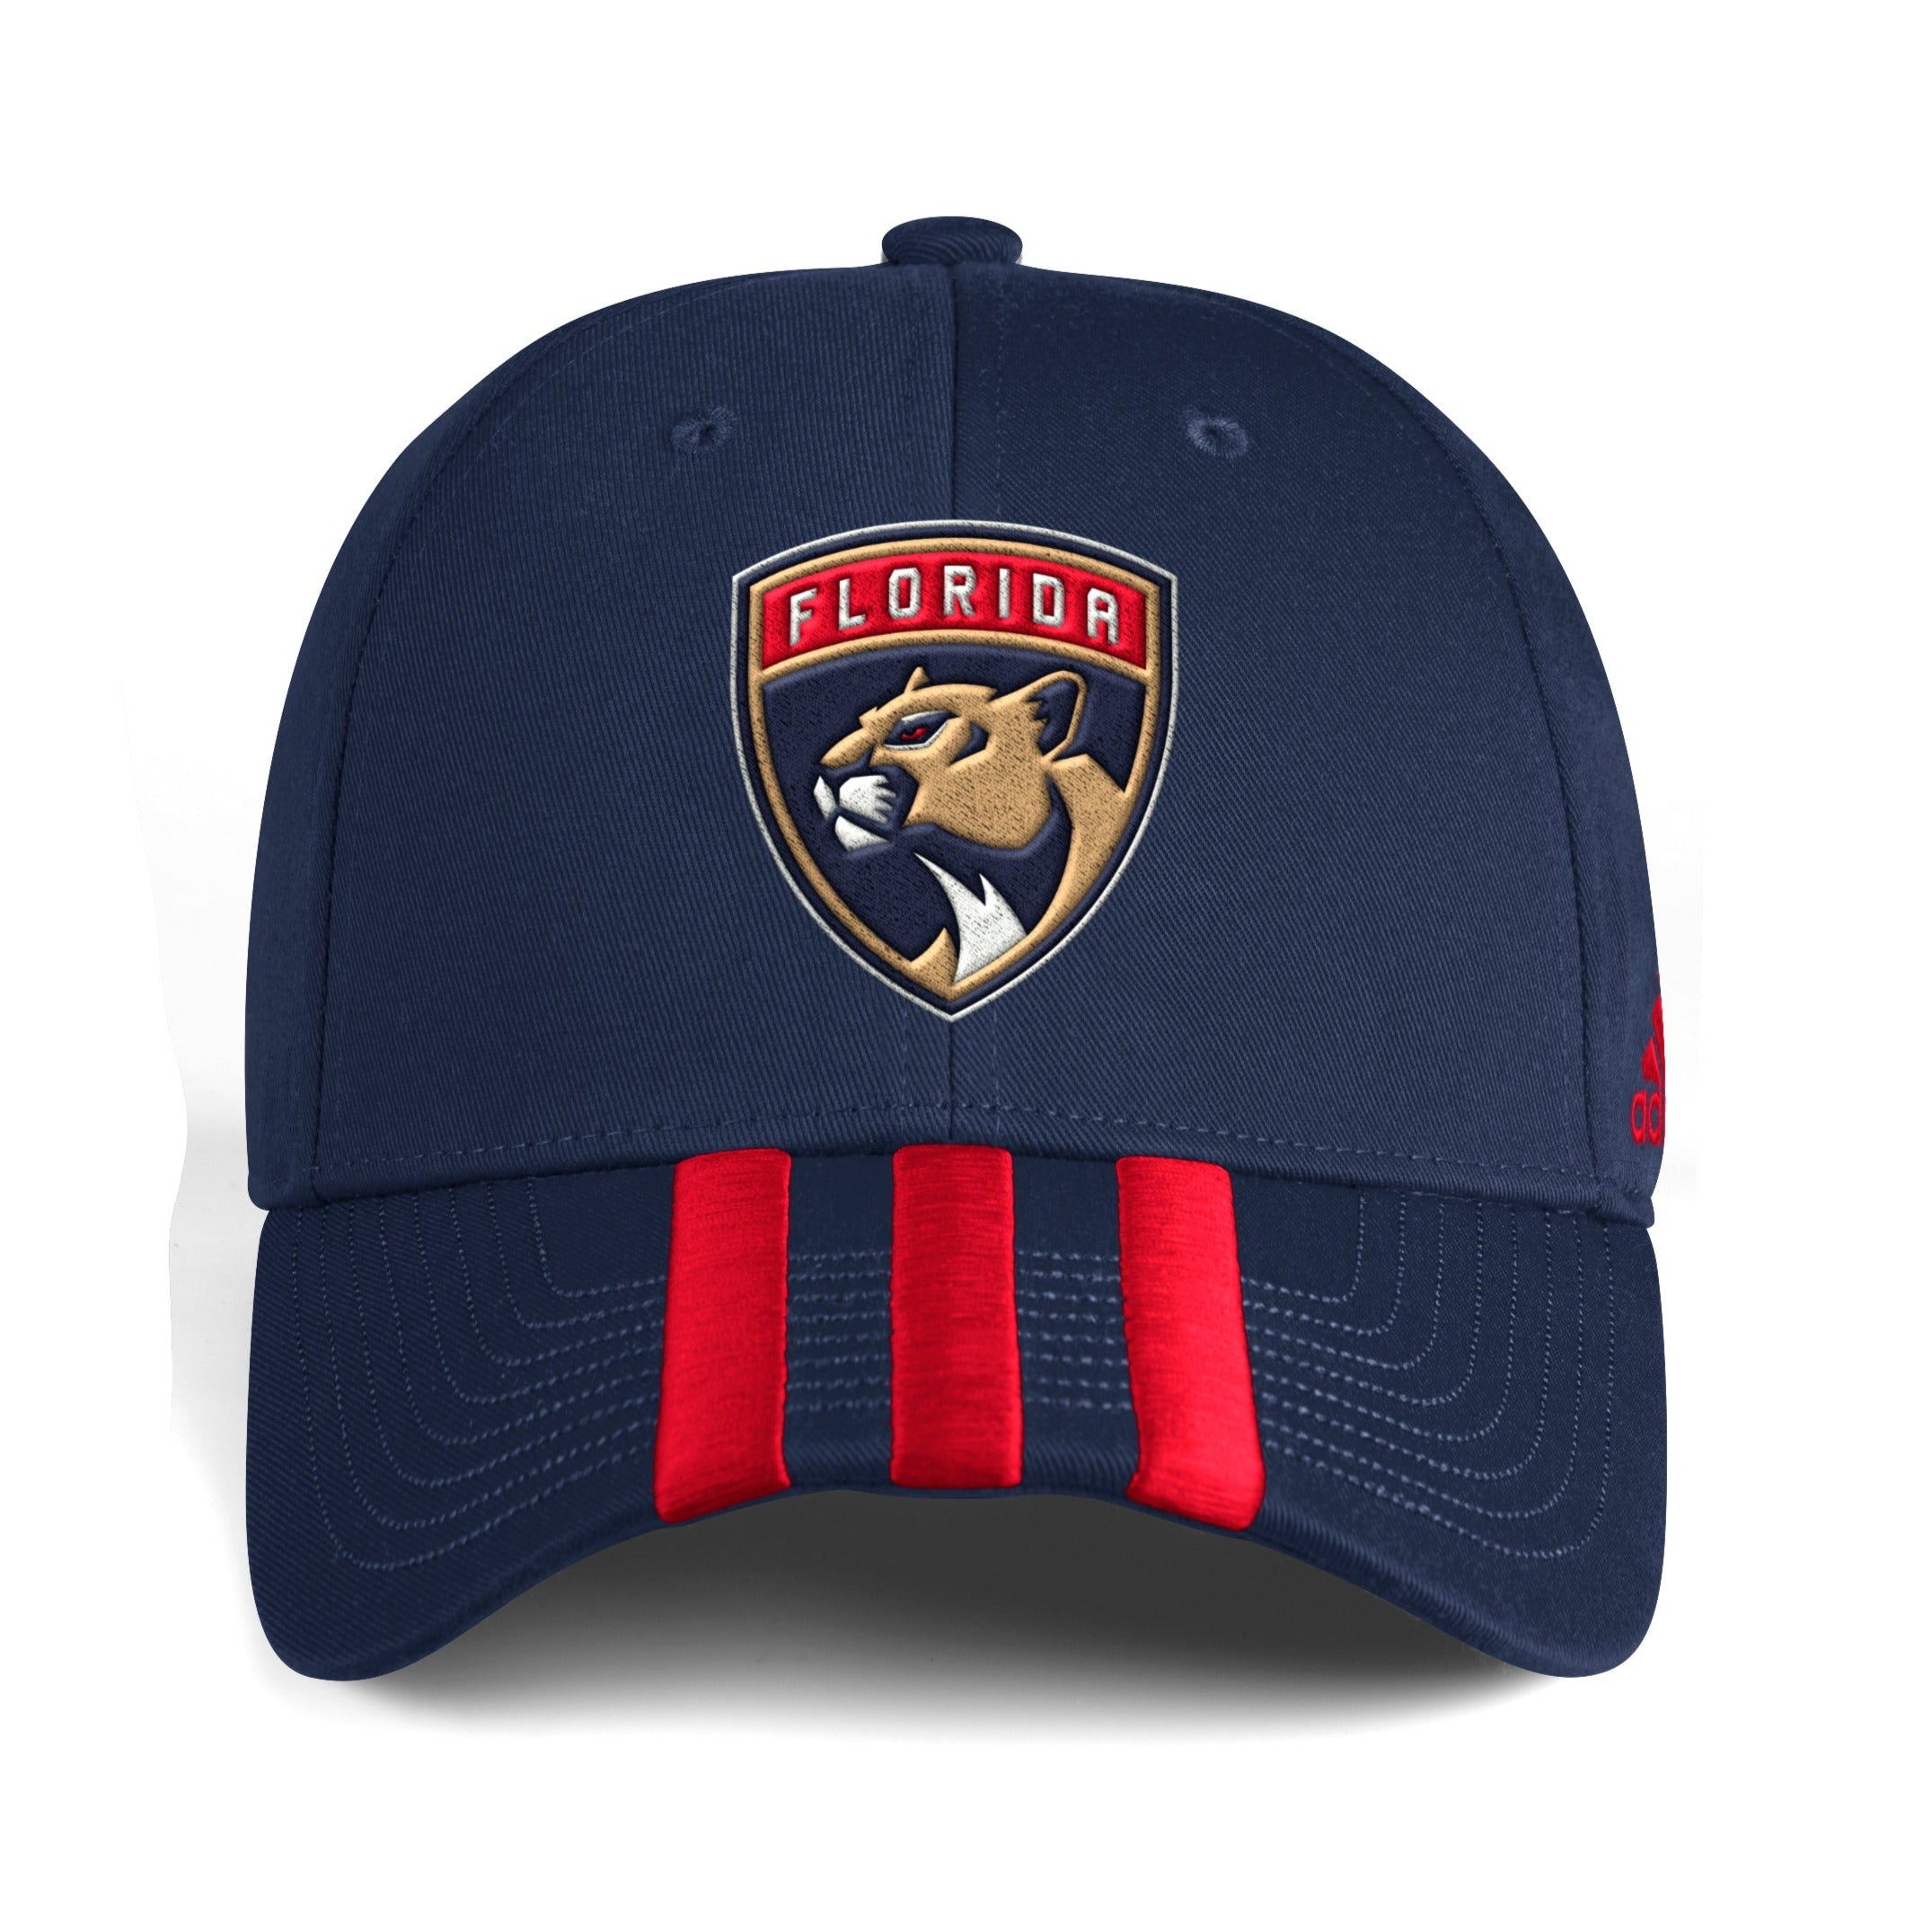 Florida Panthers adidas 3 Stripe Structured Adjustable Hat - Navy Blue